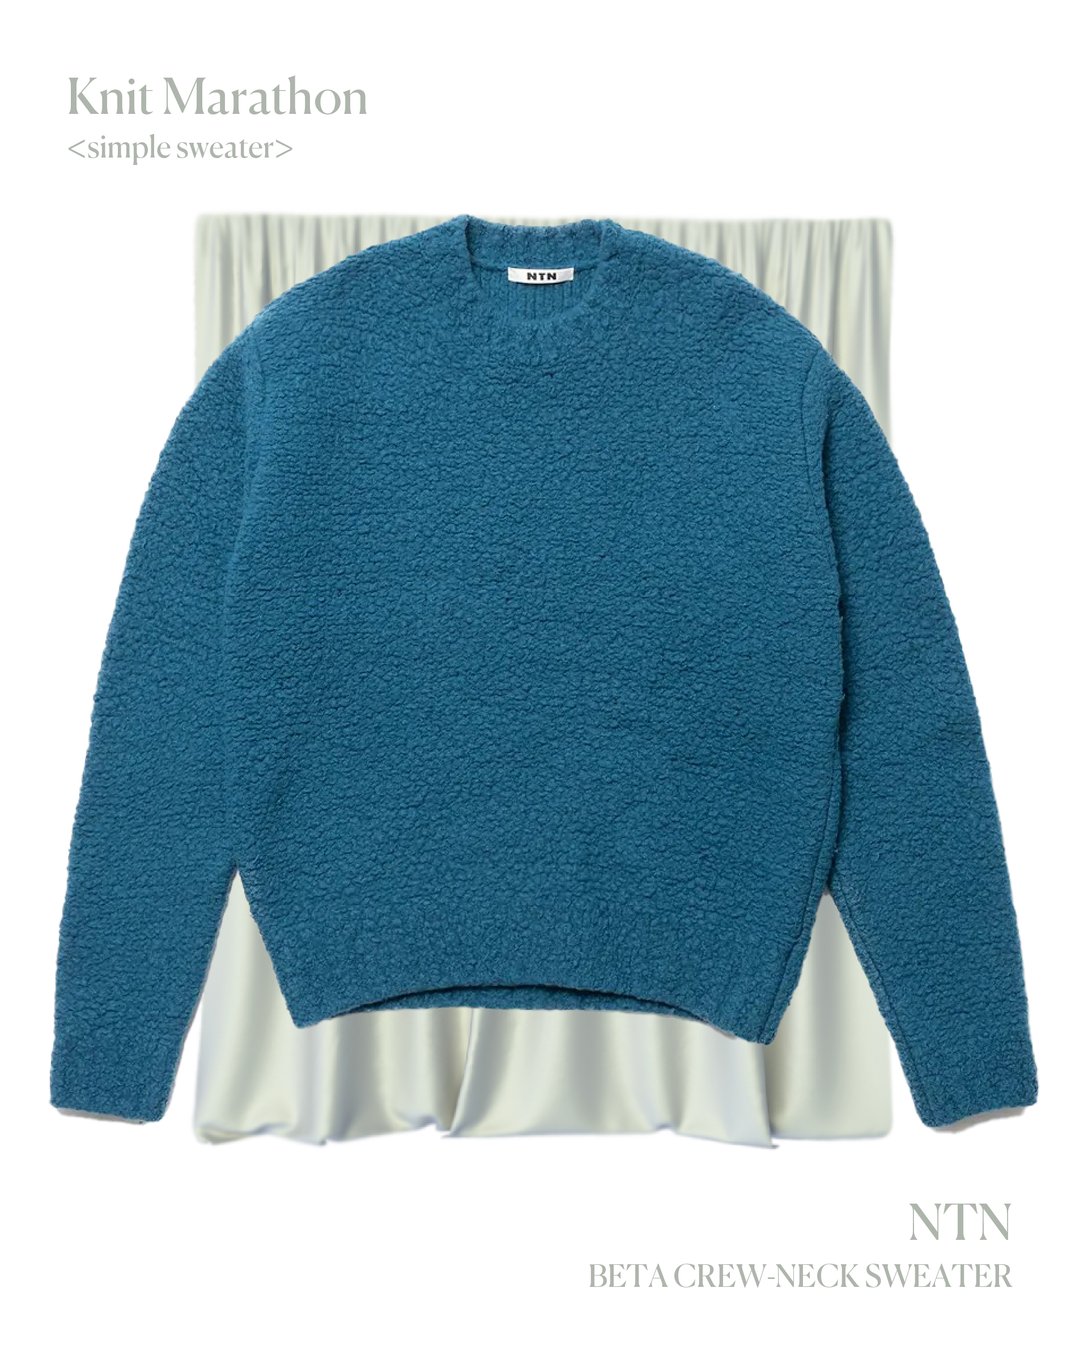 NTNのクルーネックセーター